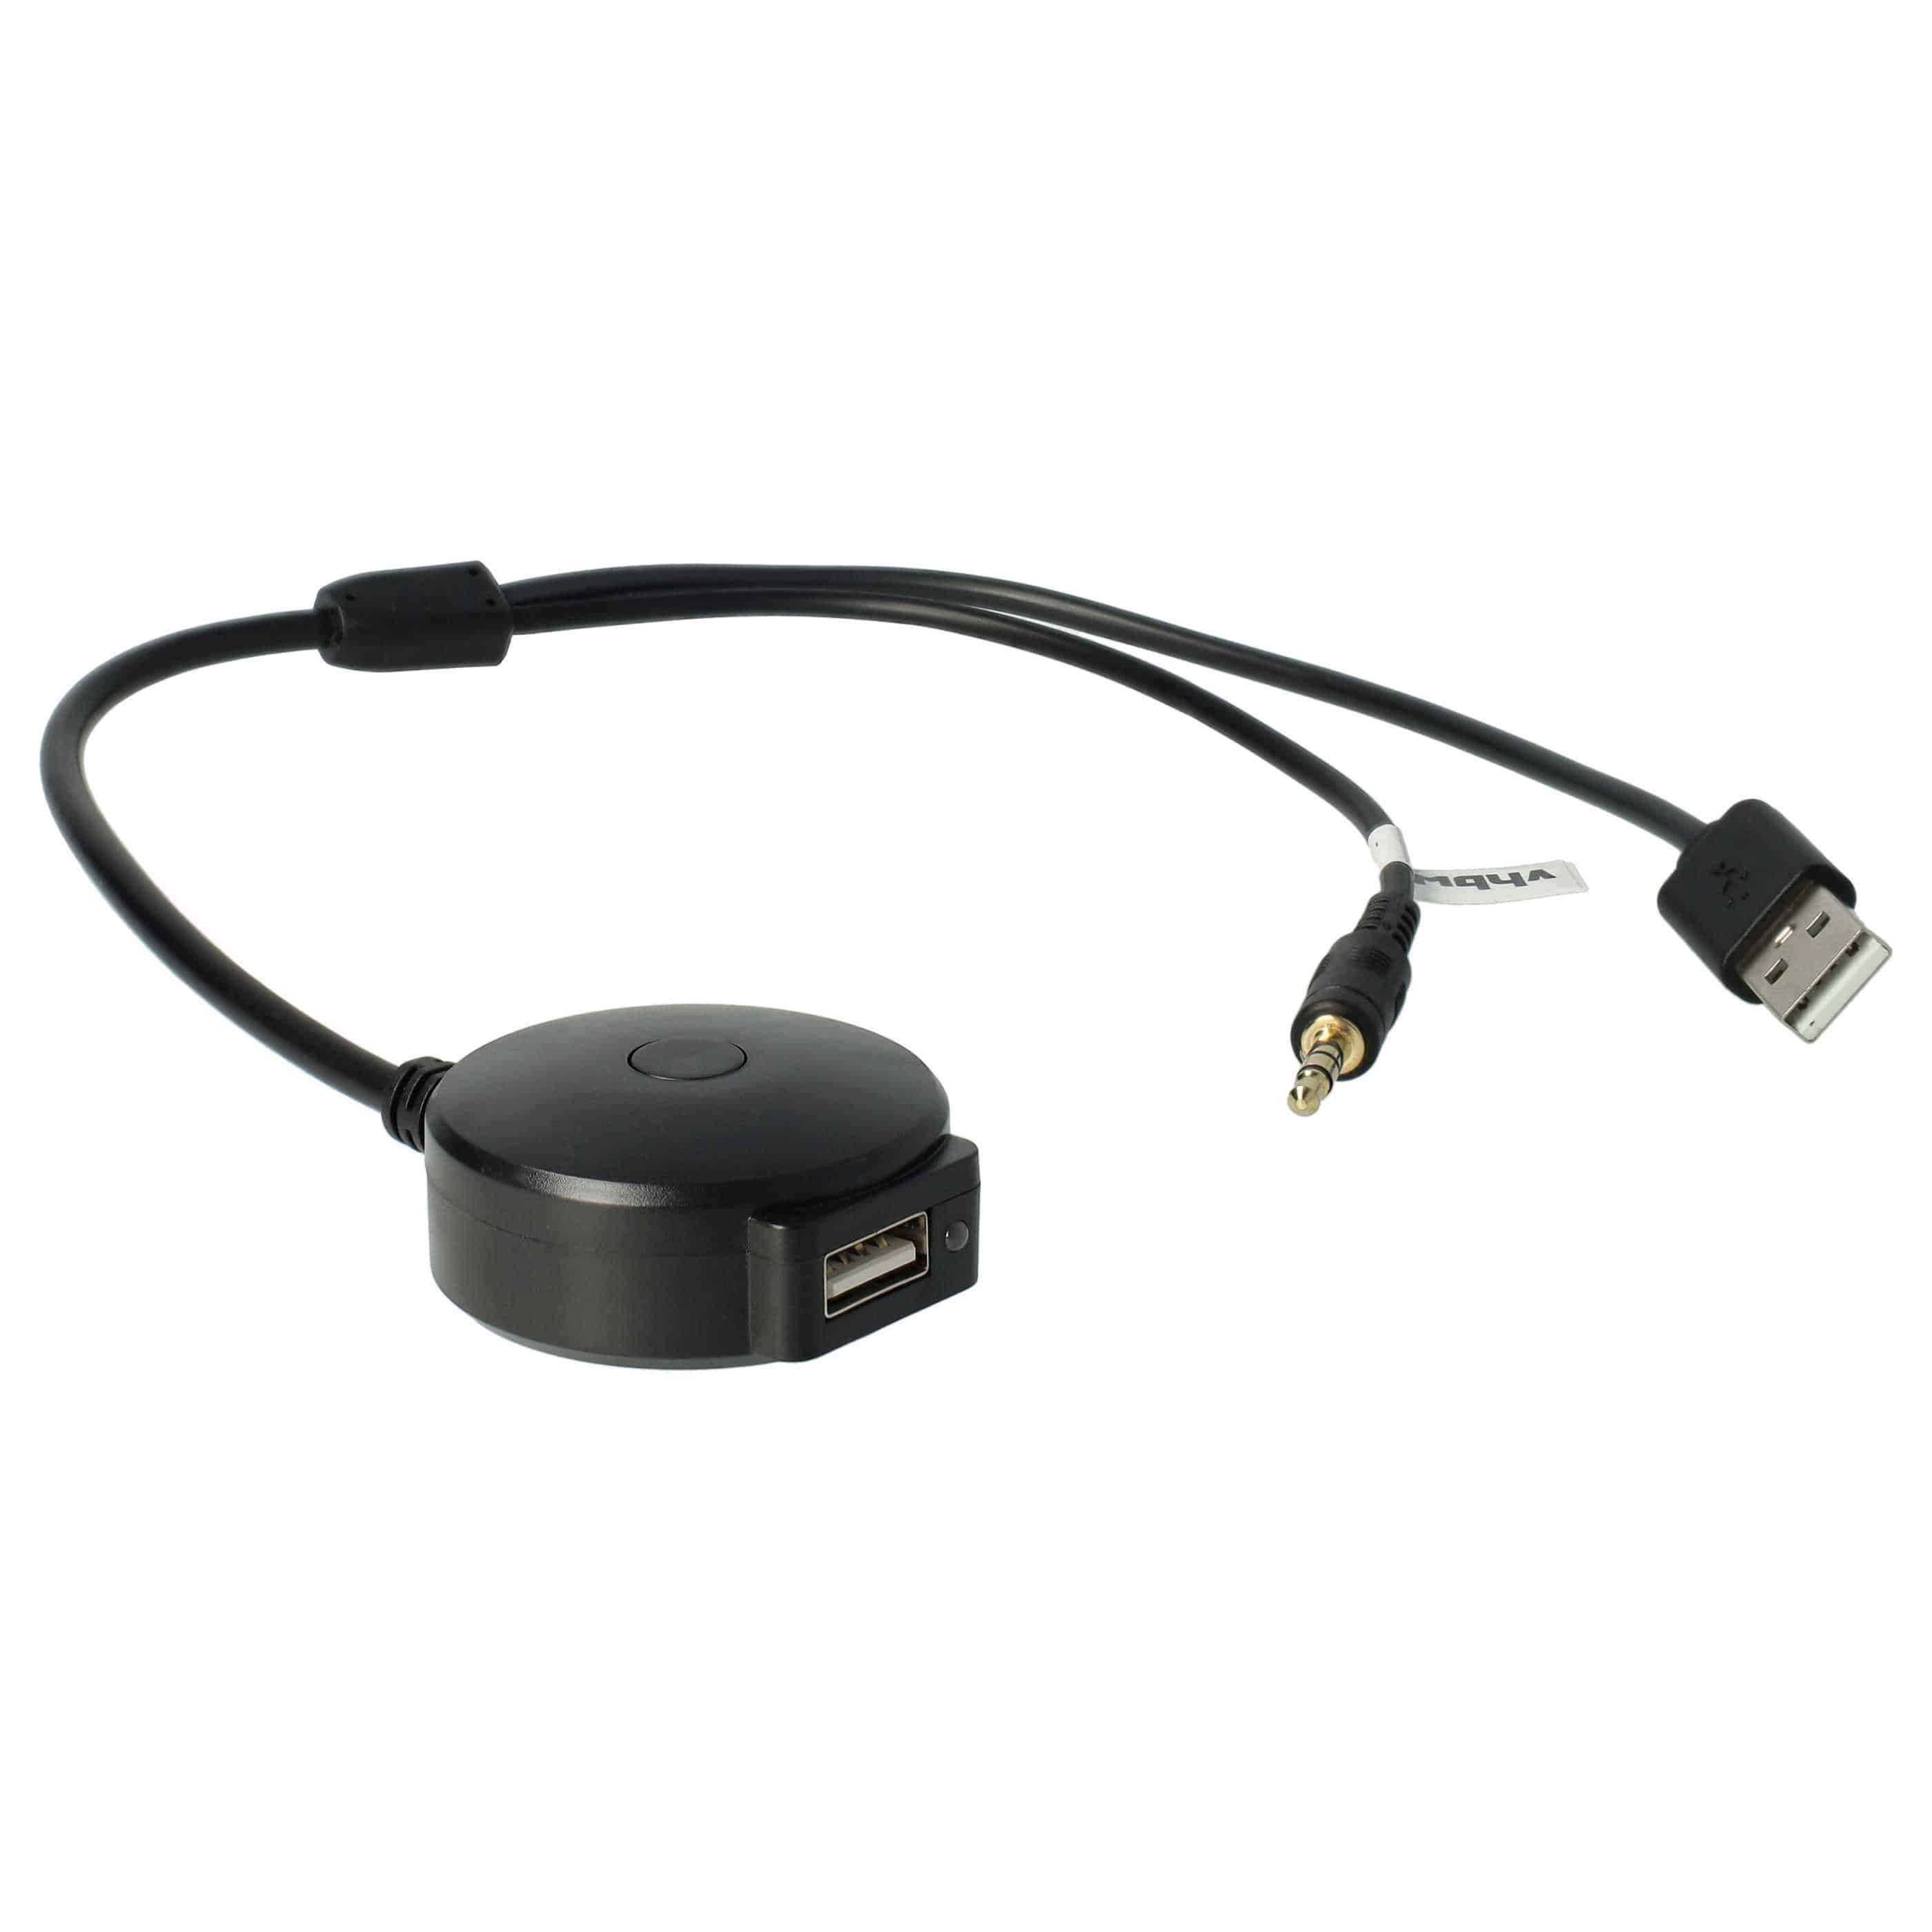 AUX Audio Adapter Cable for MINI, BMW R56 Car Radio etc. - USB, Bluetooth